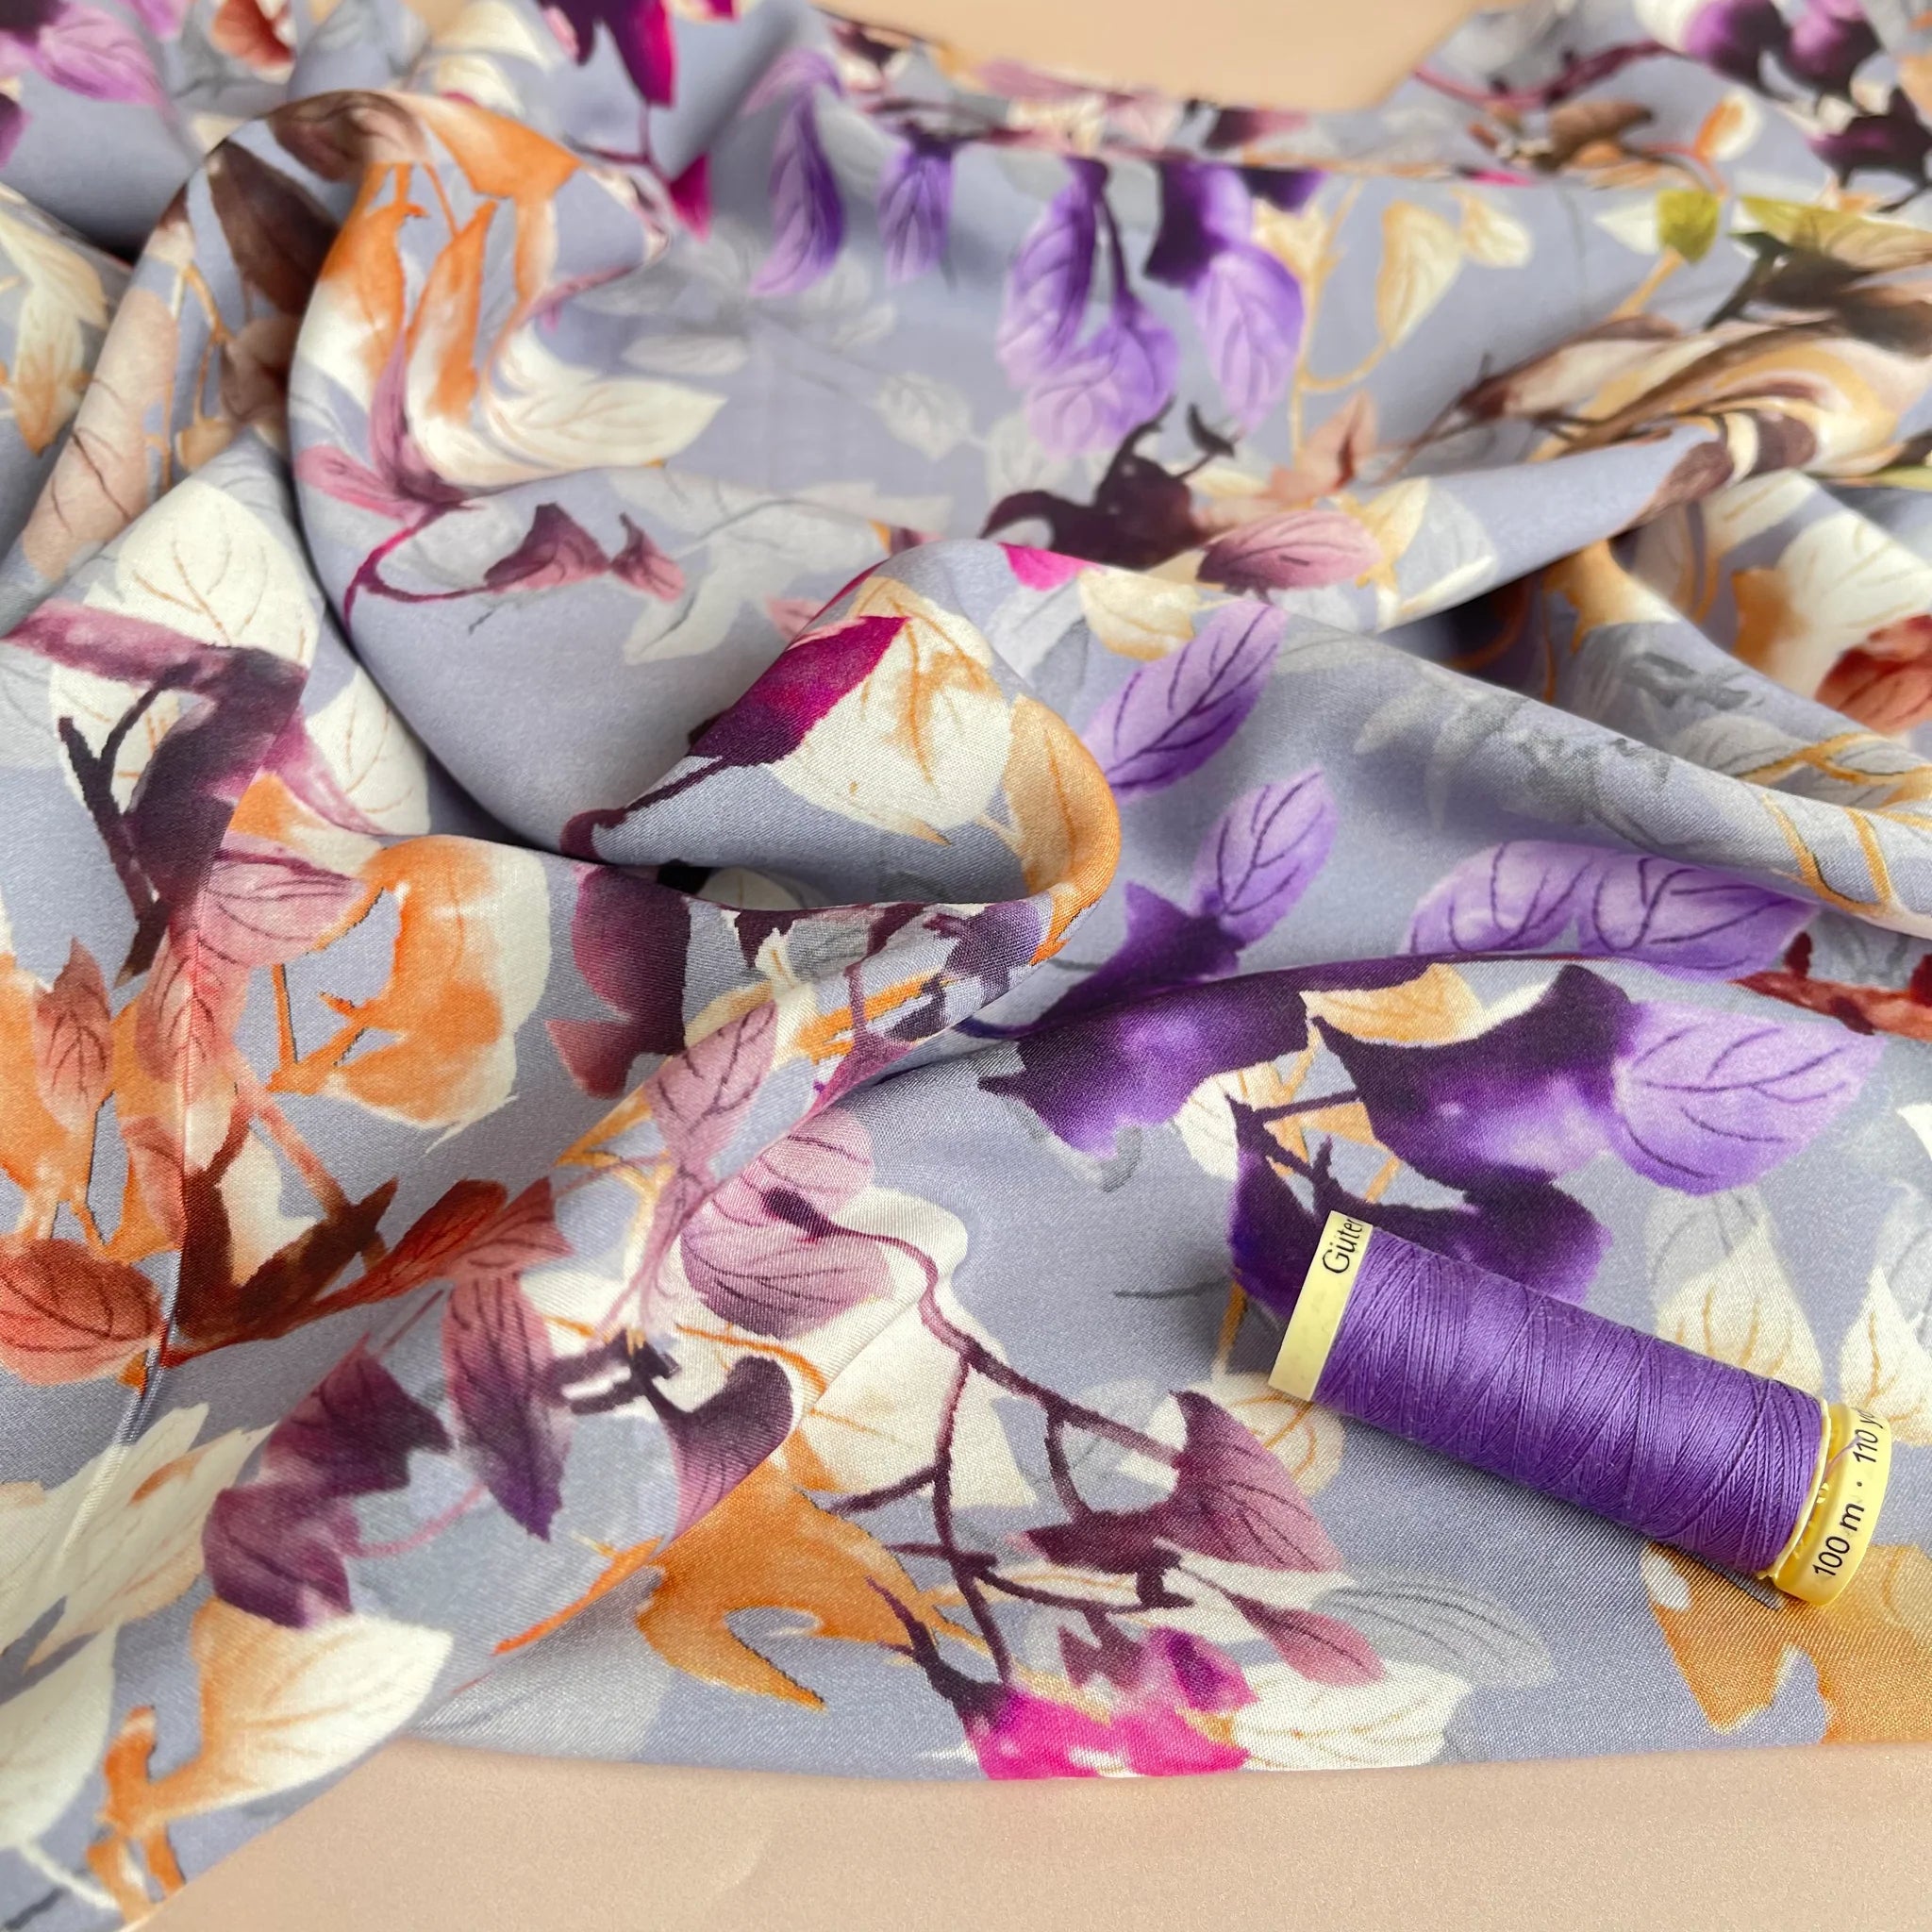 Sewing Kit - Regalia Blouse in Hazy Foliage Viscose